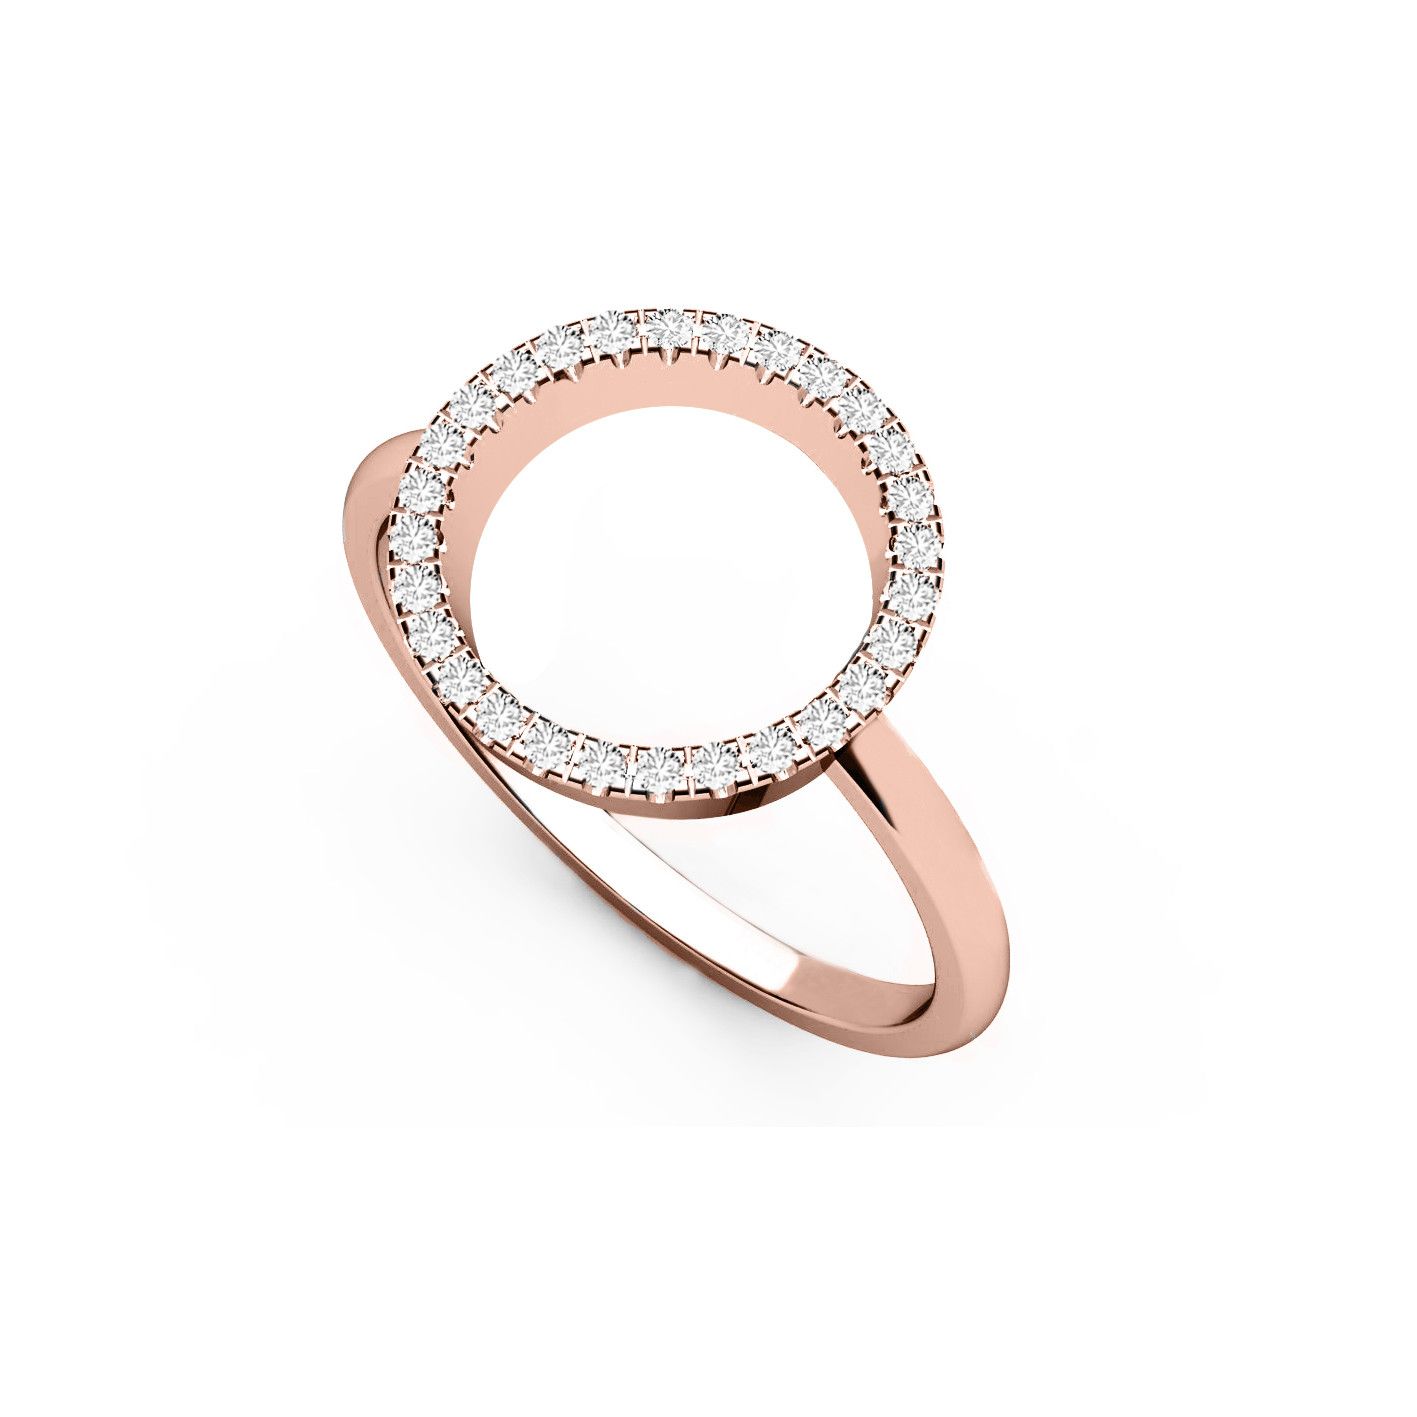 The Circle of Life Ring - Diamanti Per Tutti | Jewels | Pinterest ...